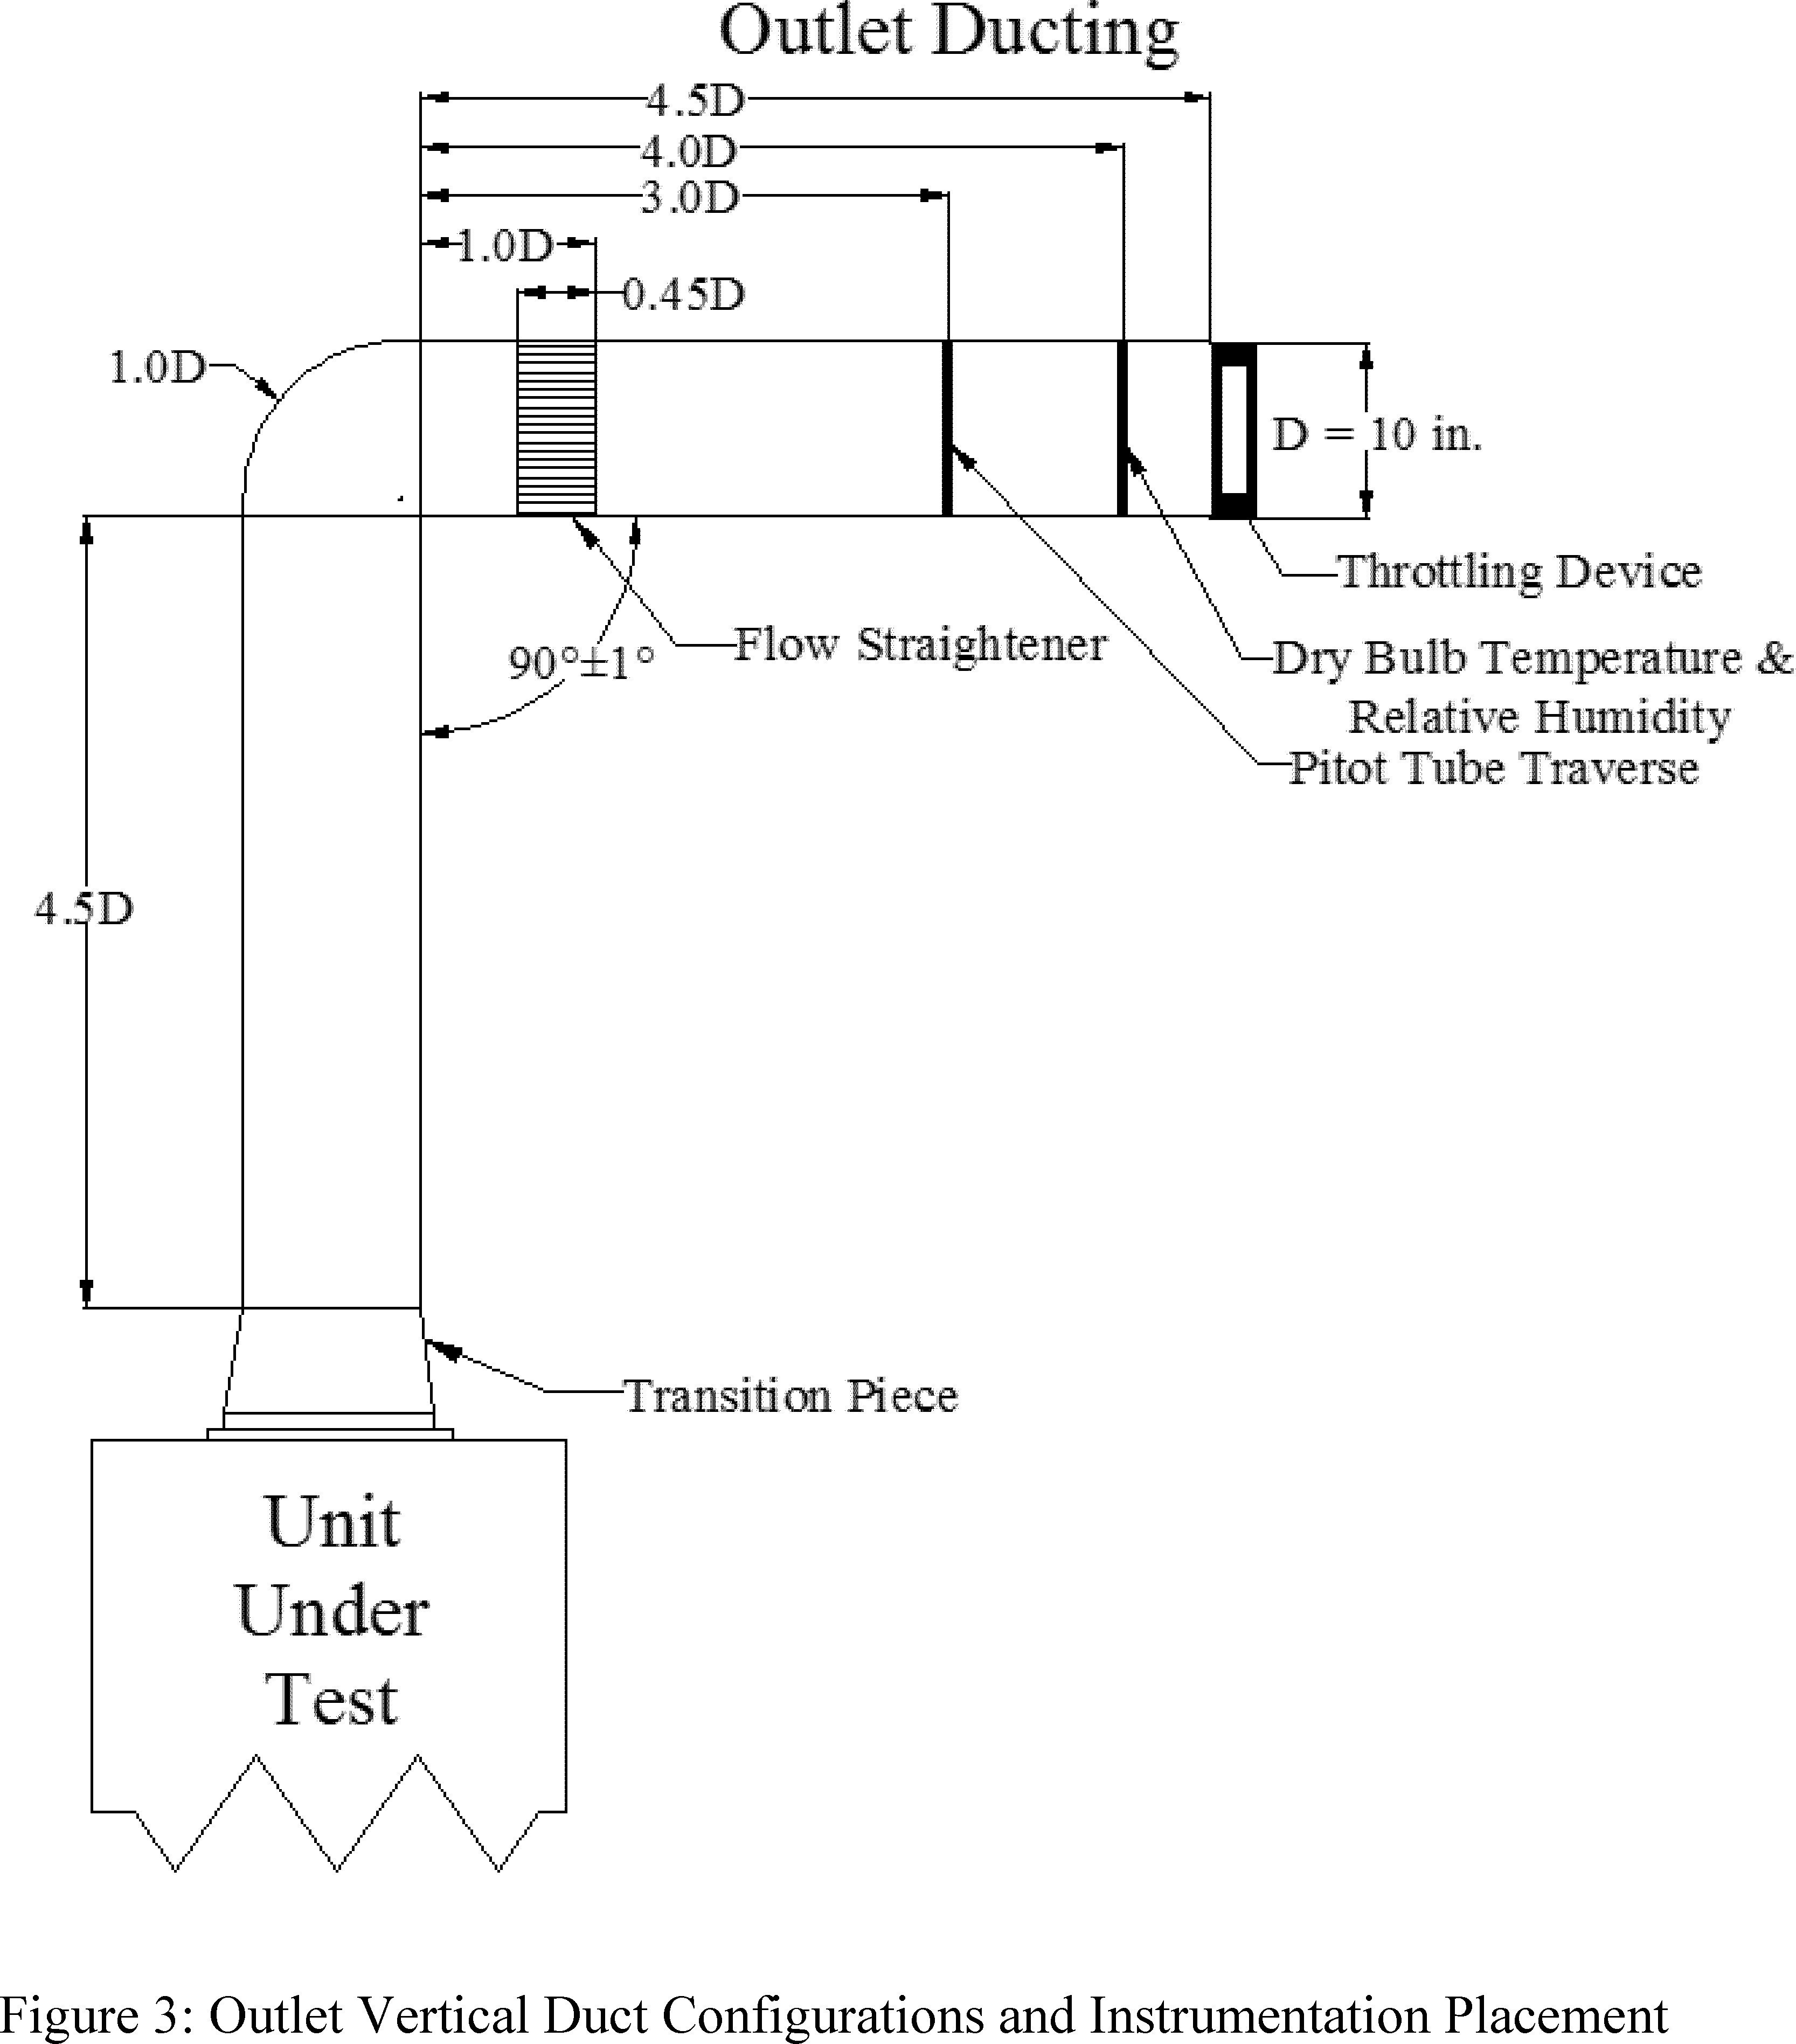 Rj11 Wiring Diagram Using Cat5 Fresh Home Phone Wiring Diagram Using Cat5 Cable Save Wiring Diagram For